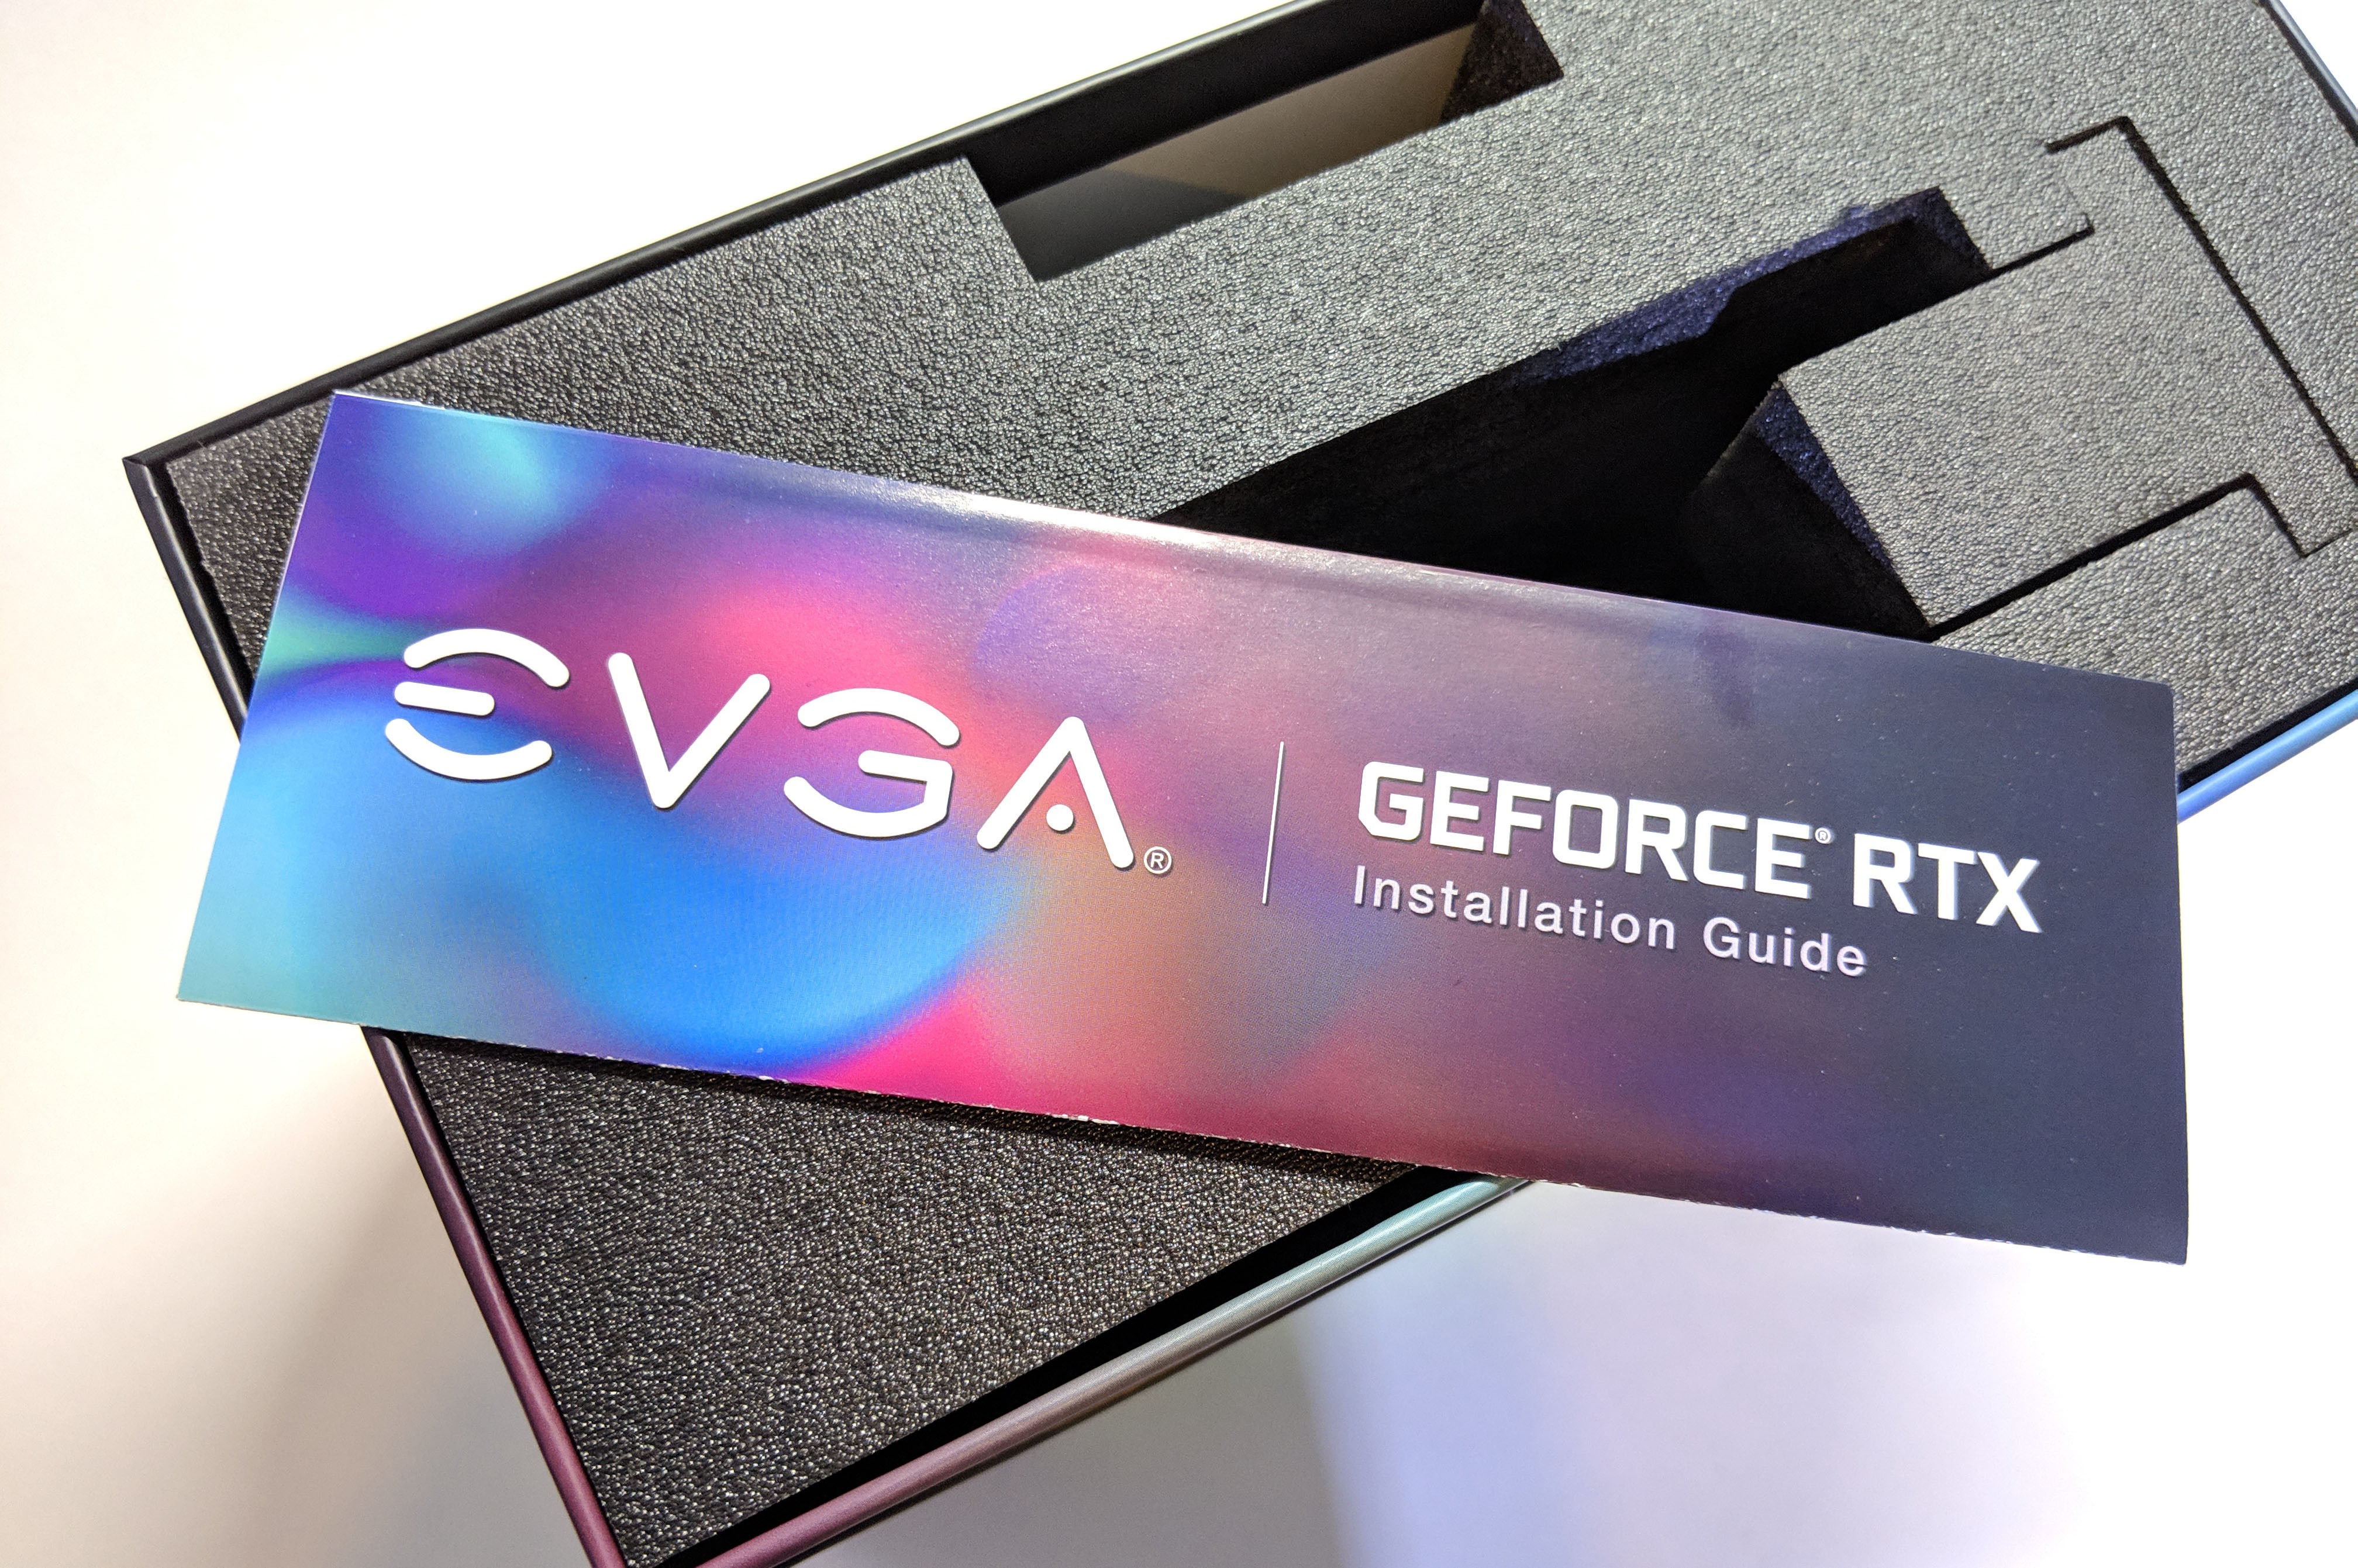 EVGA - Articles - EVGA GeForce GT 720